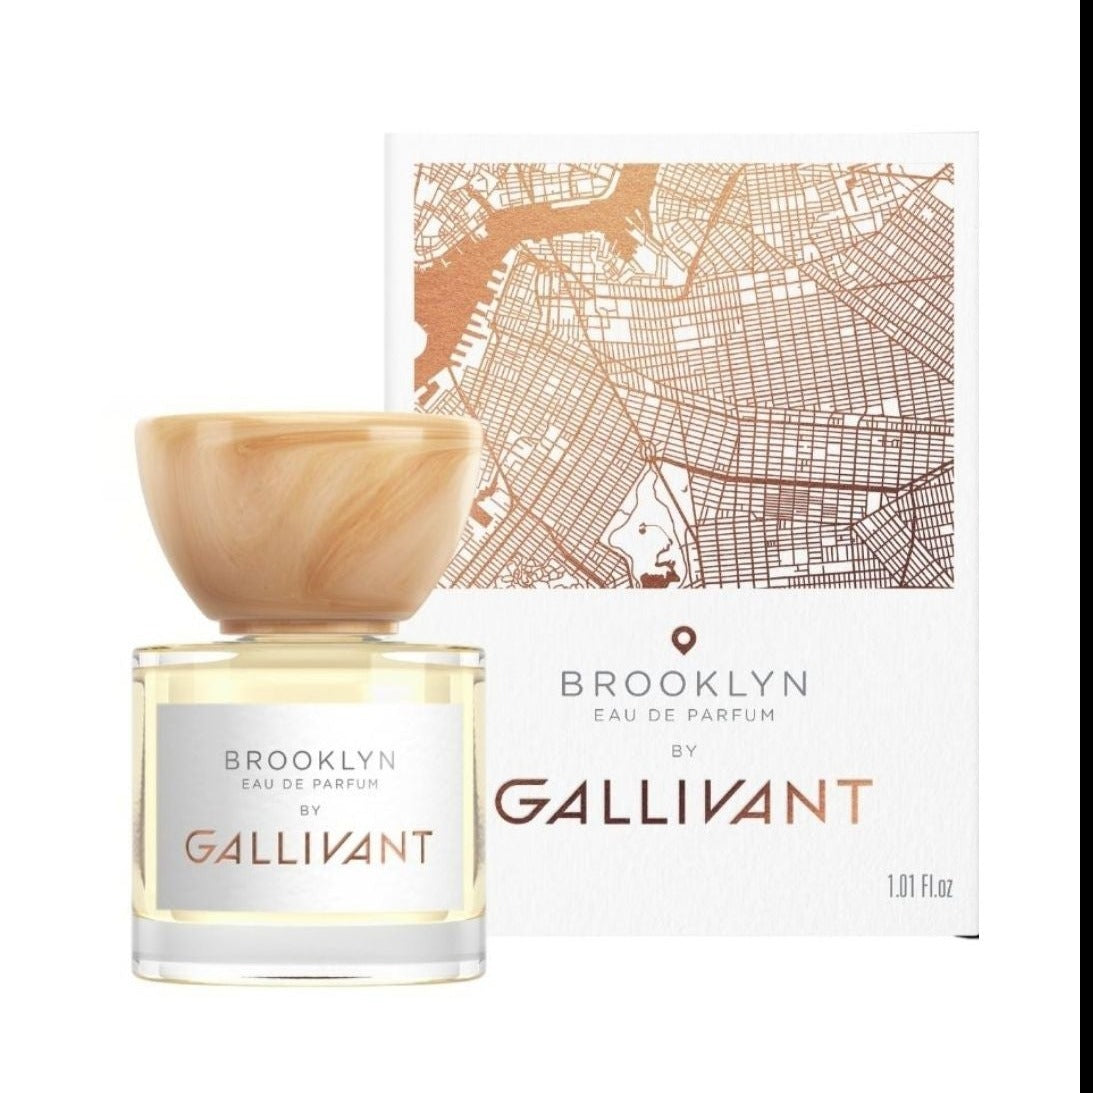 Brooklyn Eau de Parfum 30ml Bottle and Box by Gallivant